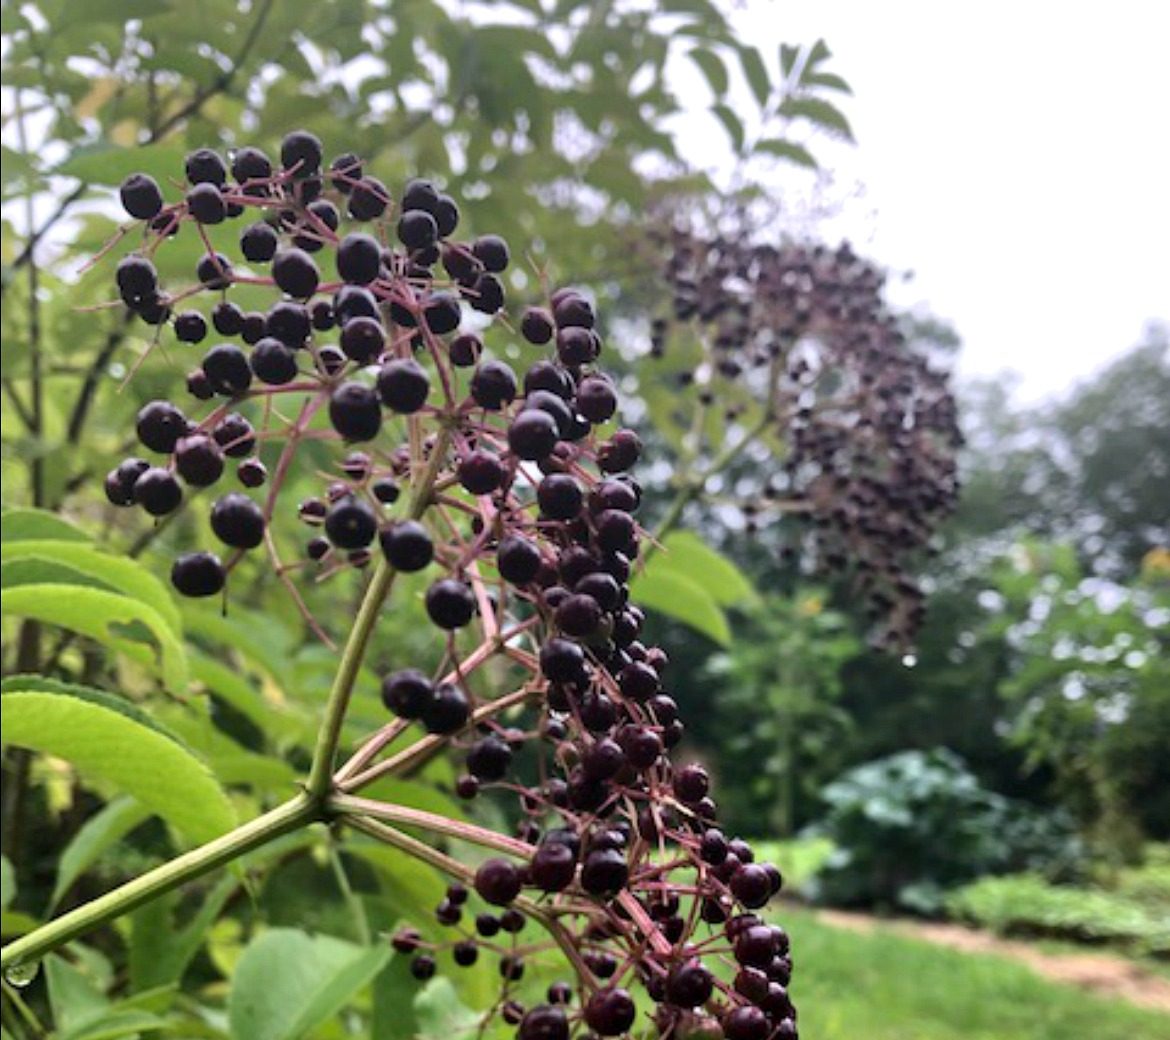 14 Elderberry Benefits featured image showing ripe elderberry cluster flowerhead on bush